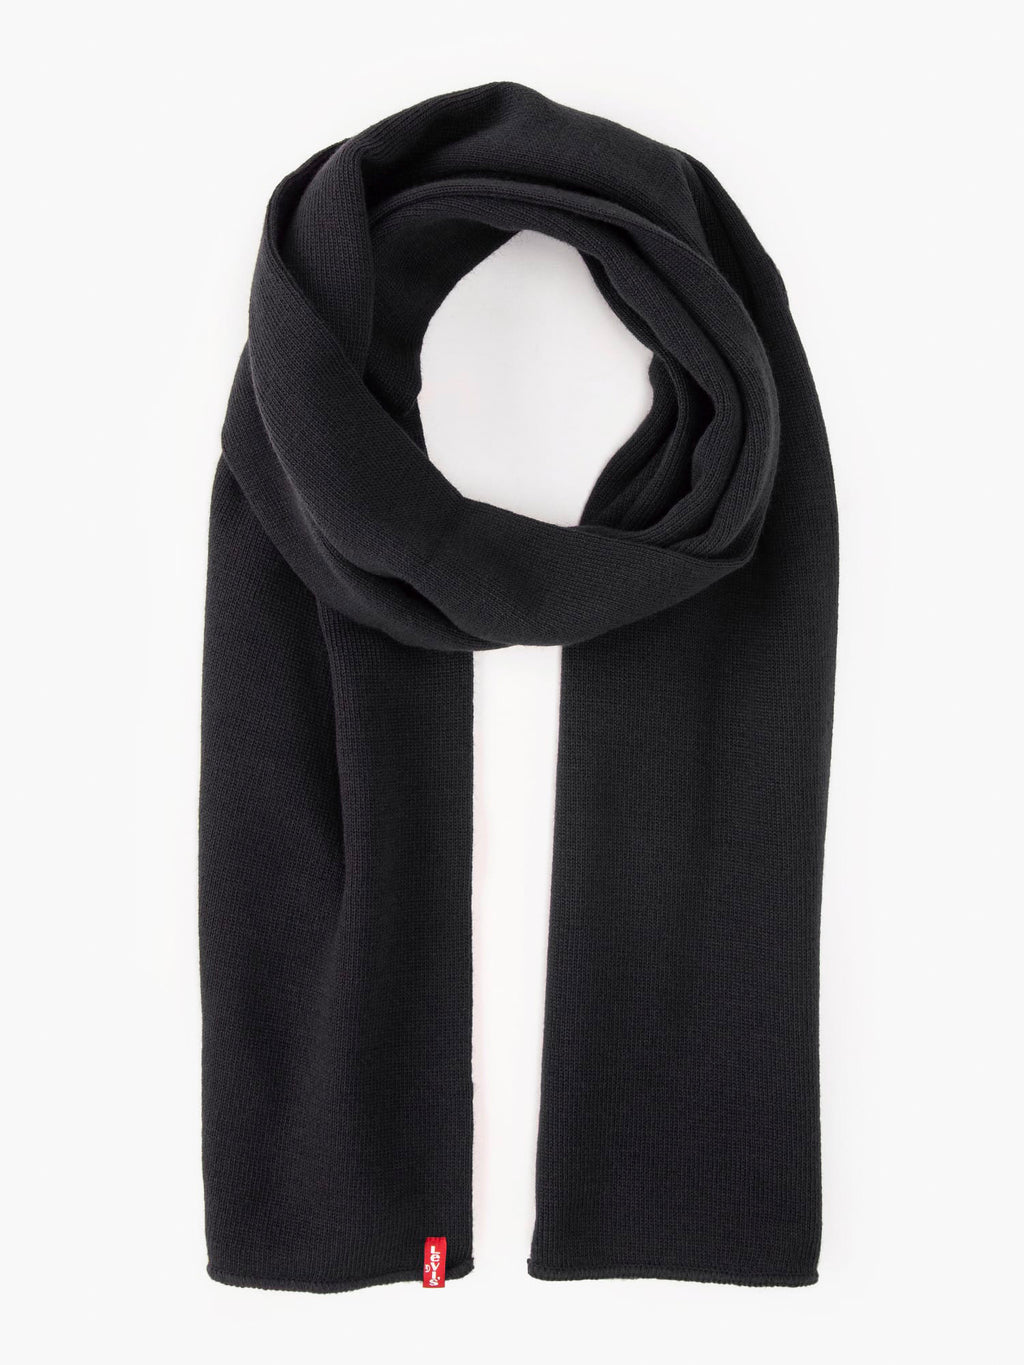 levis-scarf-black-14152-59